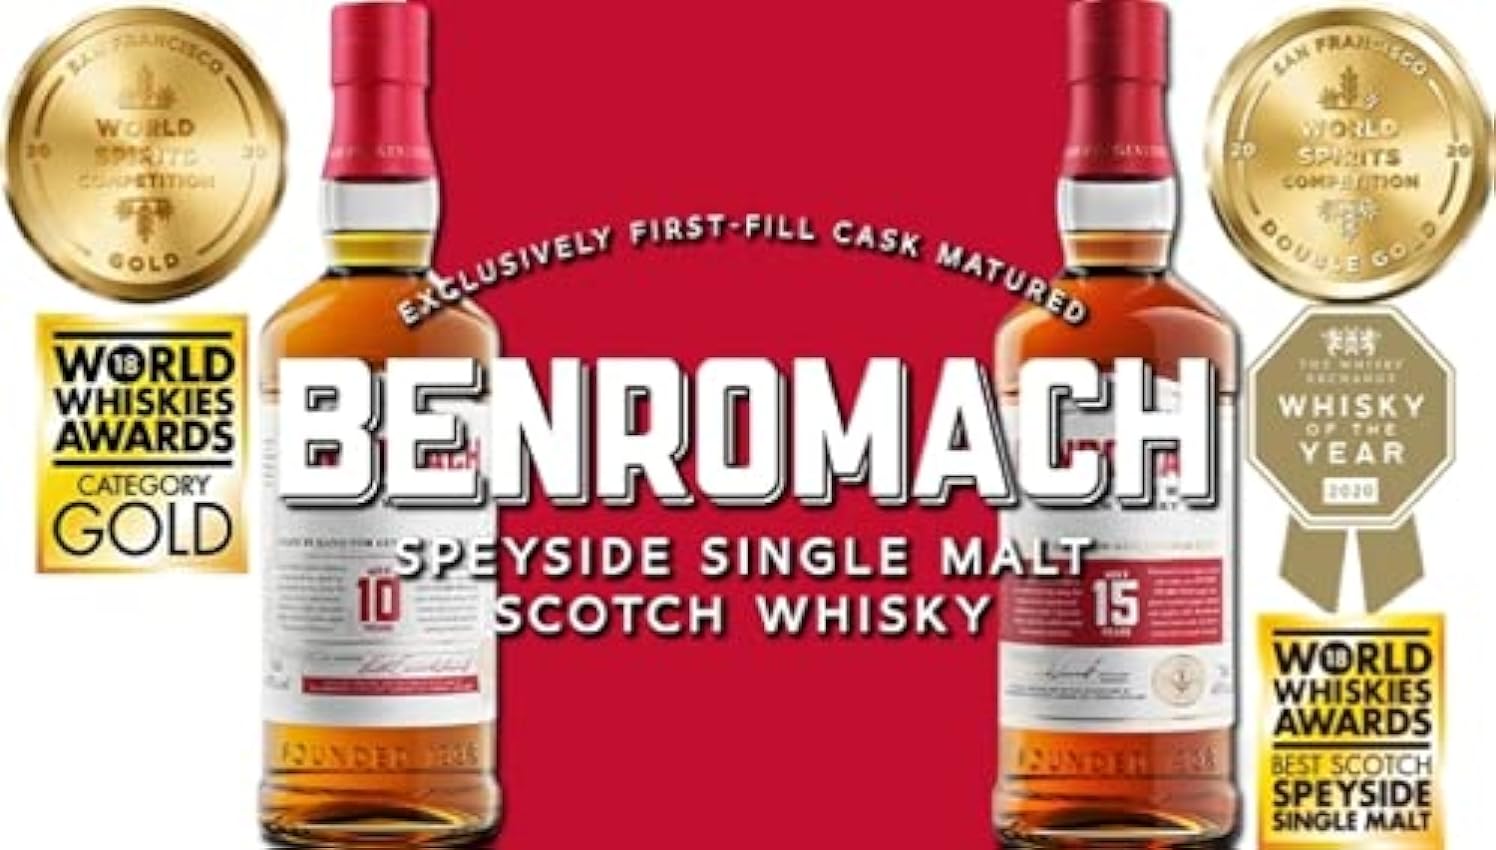 BENROMACH - 15 ans - Whisky Single Malt - 43% Alcool - Origine : Ecosse/Speyside - Bouteille 70 cl O6exGJTz